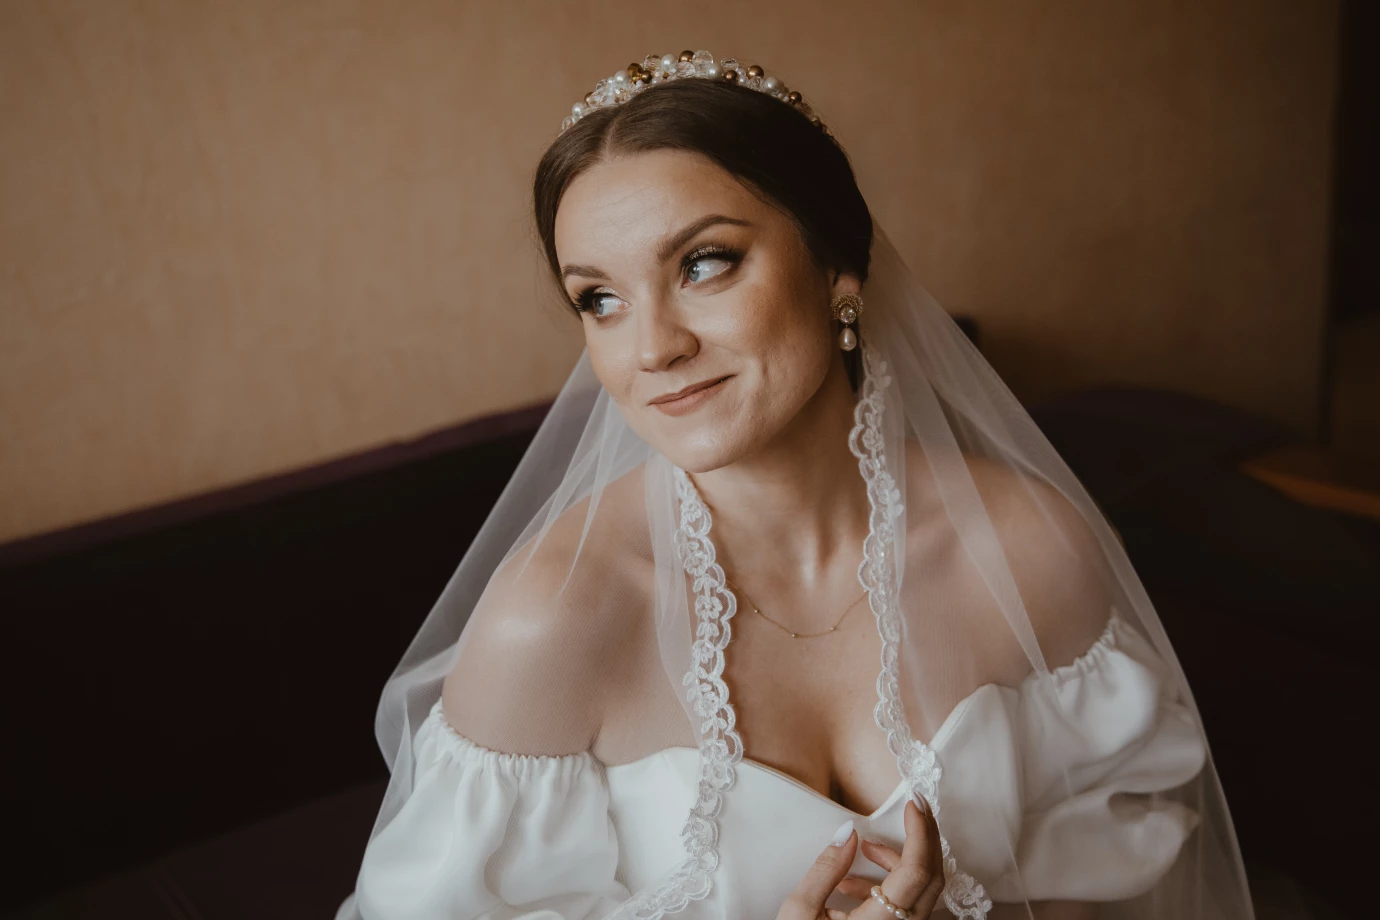 zdjęcia lublin fotograf wart-dominika-wlodarska portfolio zdjecia slubne inspiracje wesele plener slubny sesja slubna